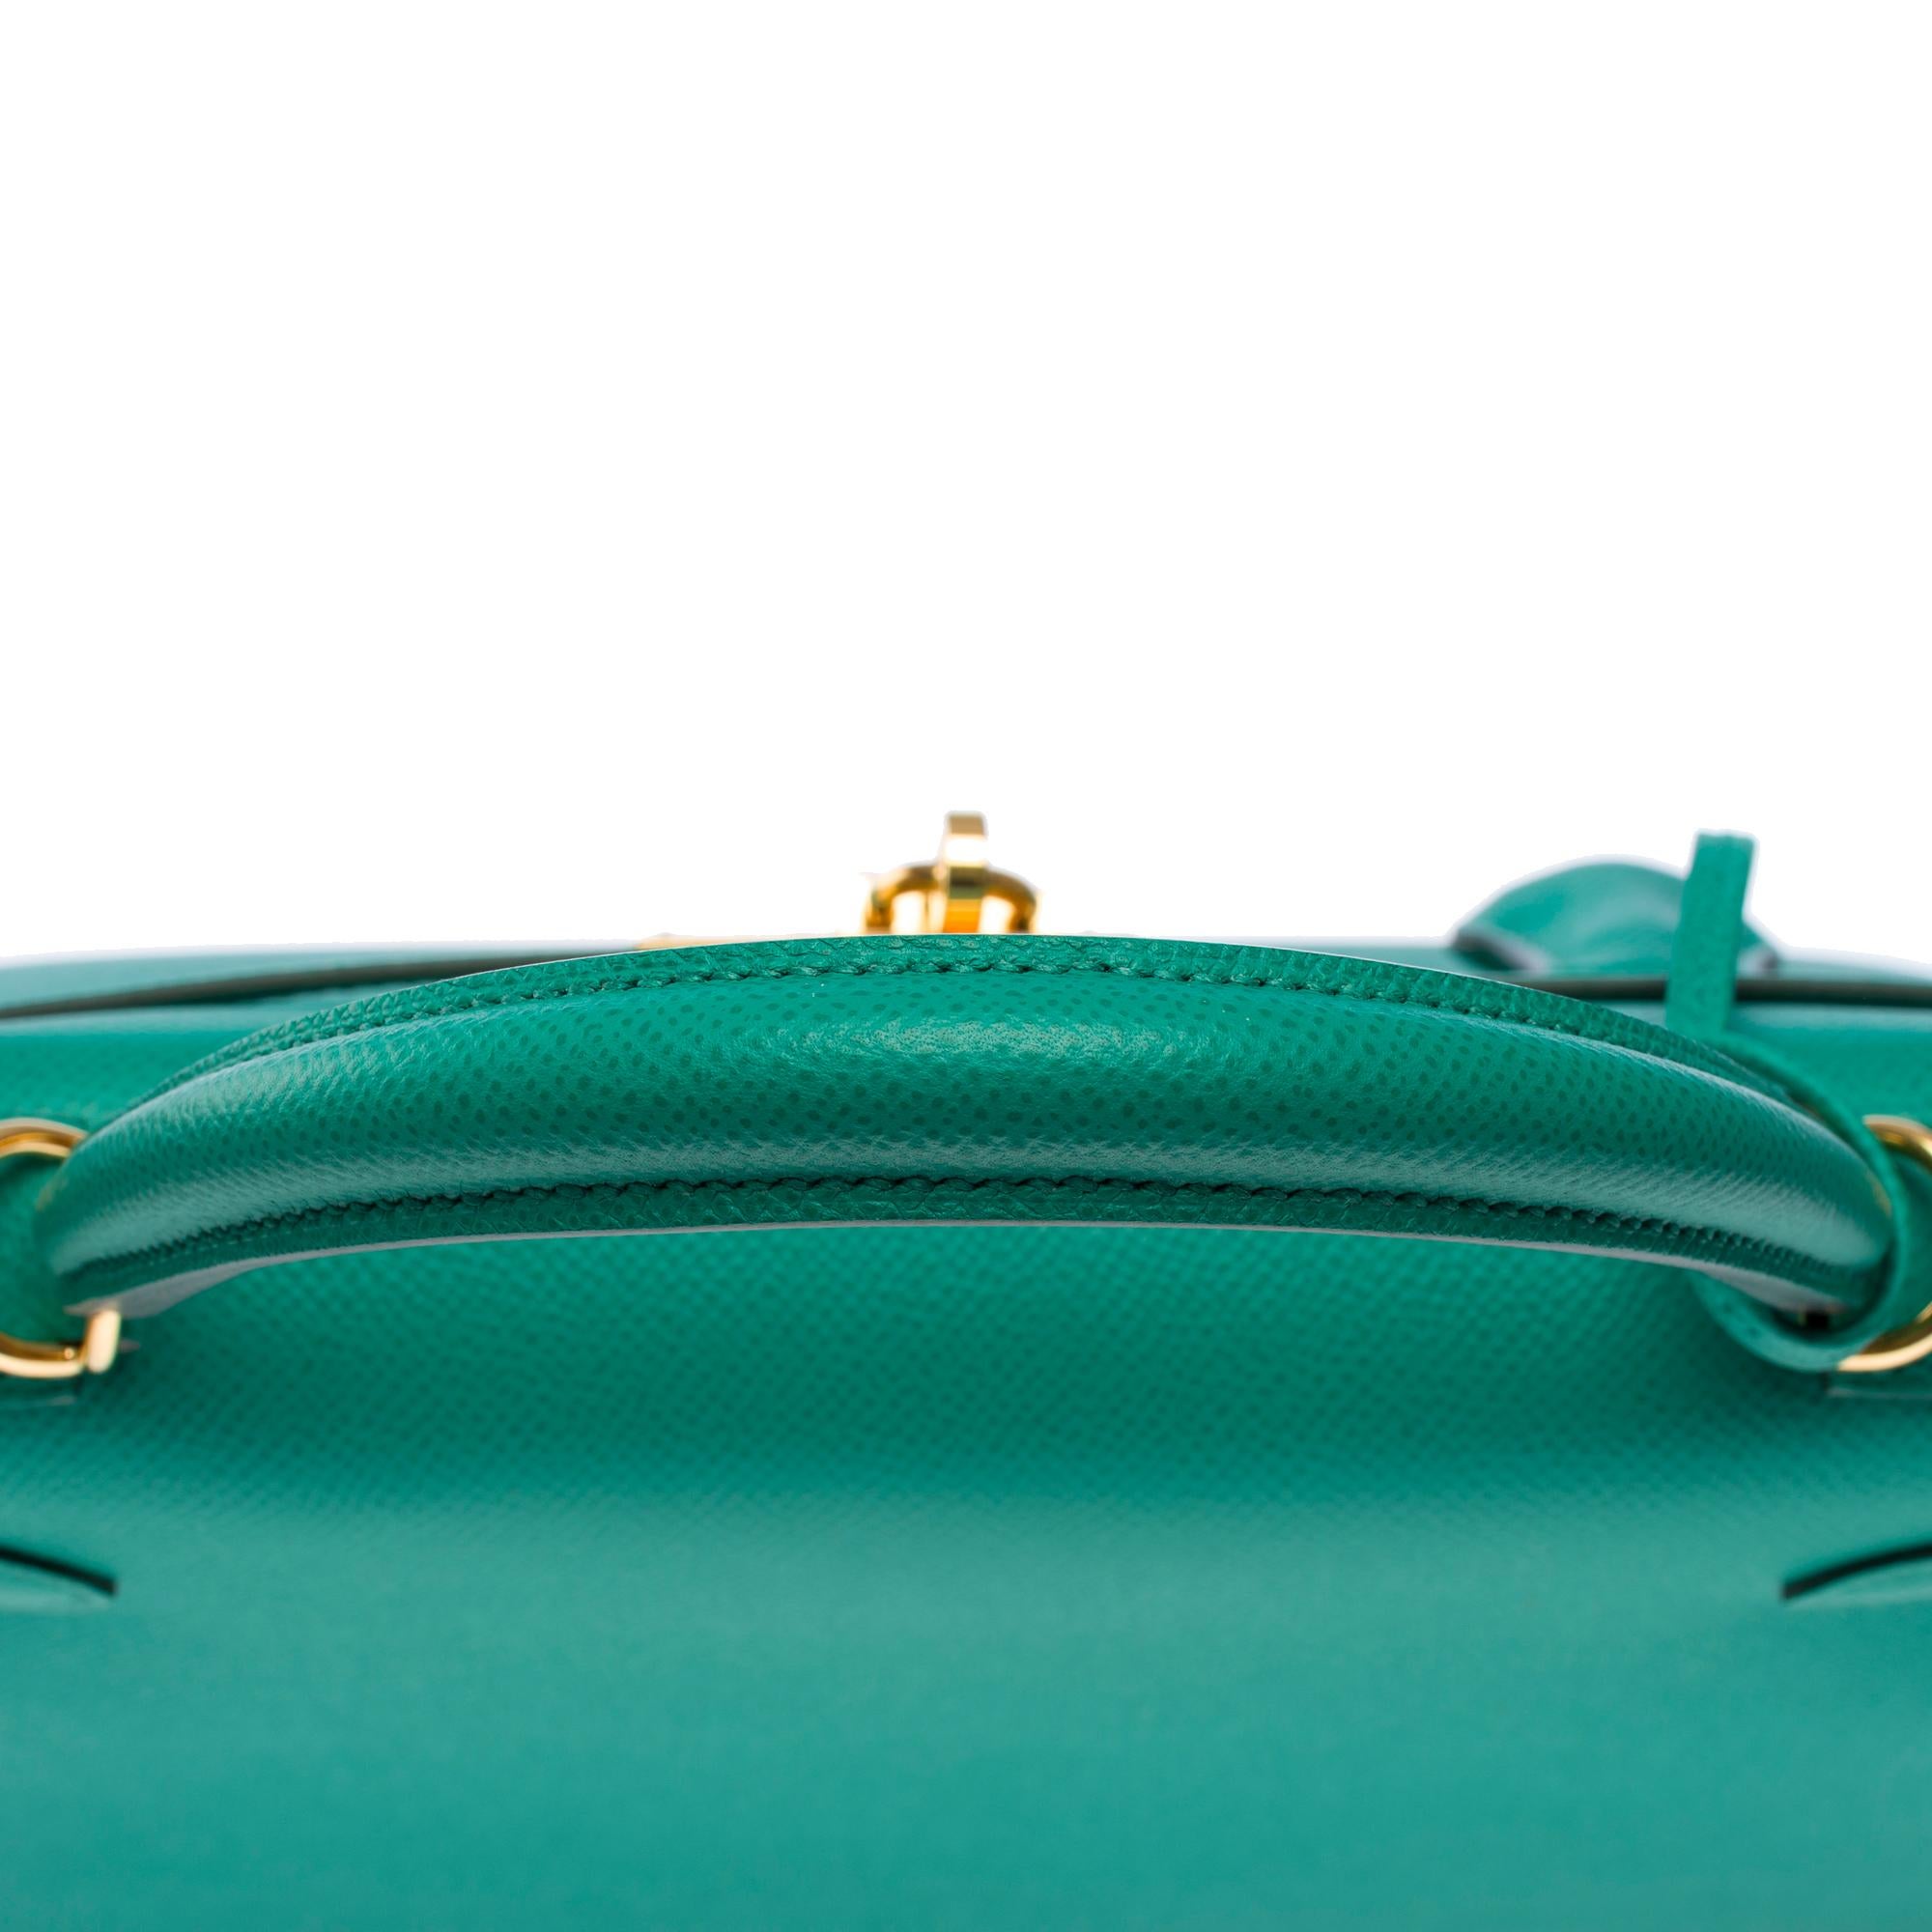 New Hermès Kelly 28 sellier handbag strap in Vert Jade Epsom leather, GHW For Sale 6